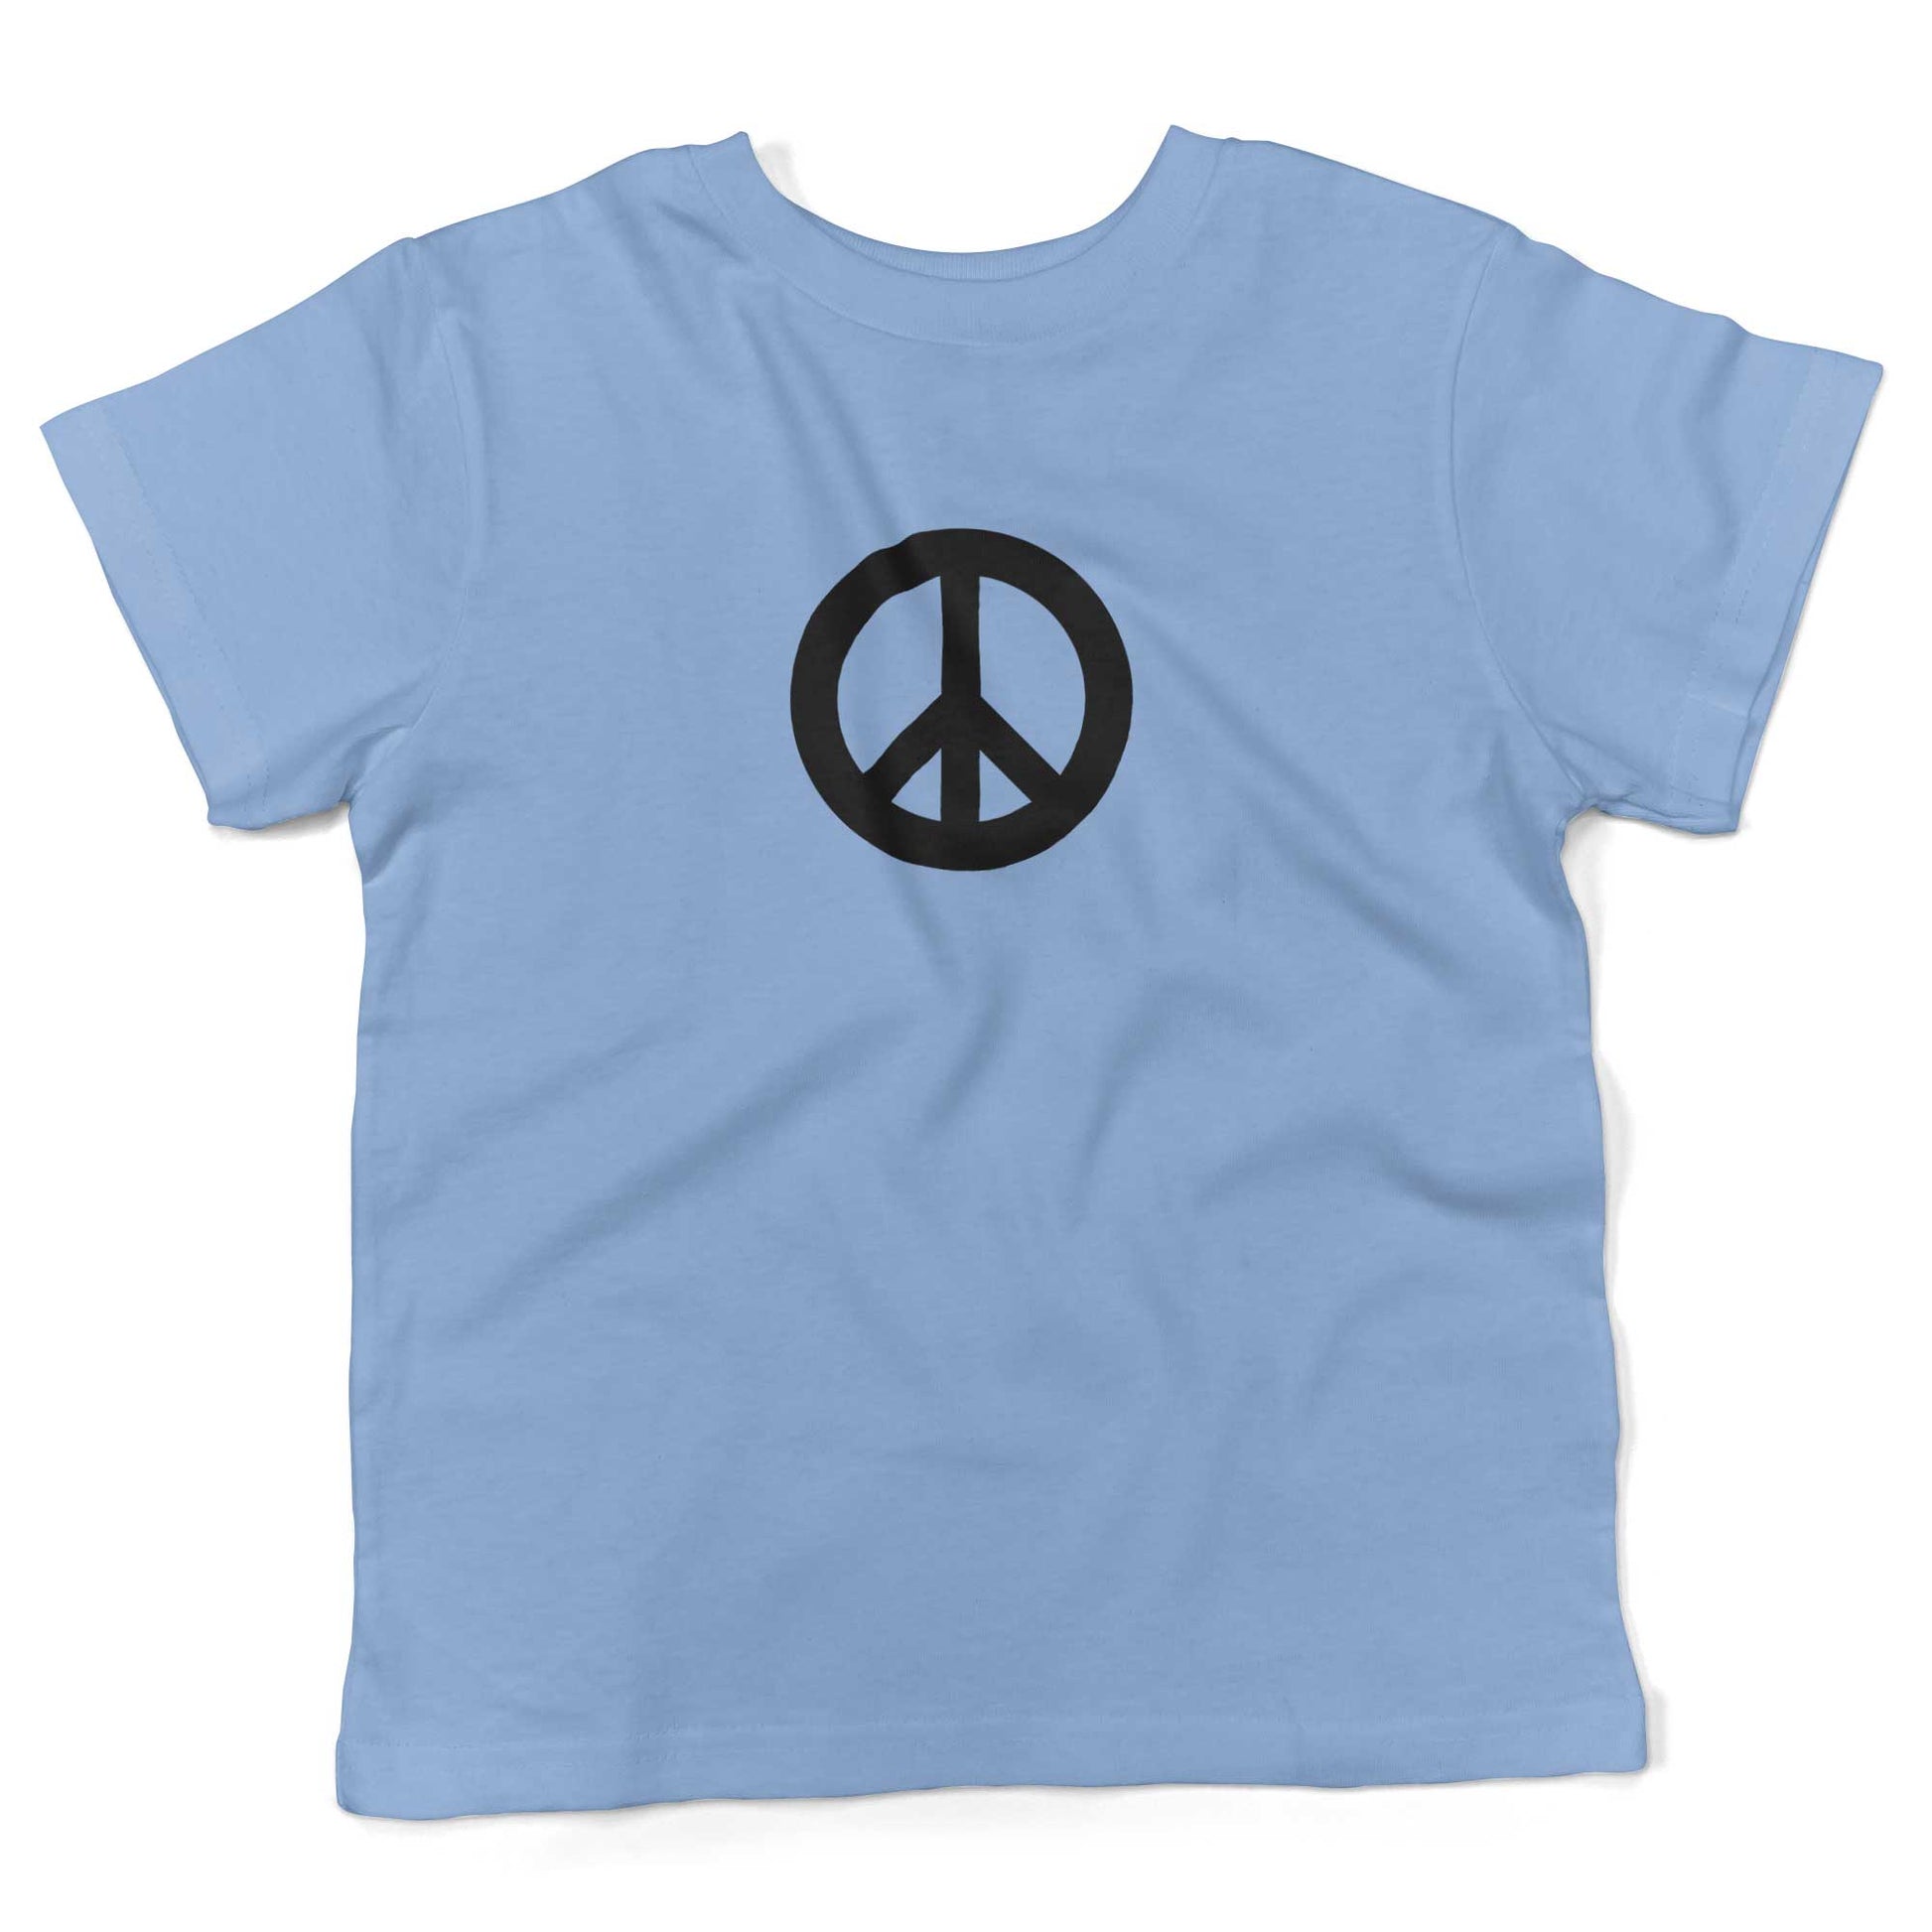 Peace Sign Toddler Shirt-Organic Baby Blue-2T